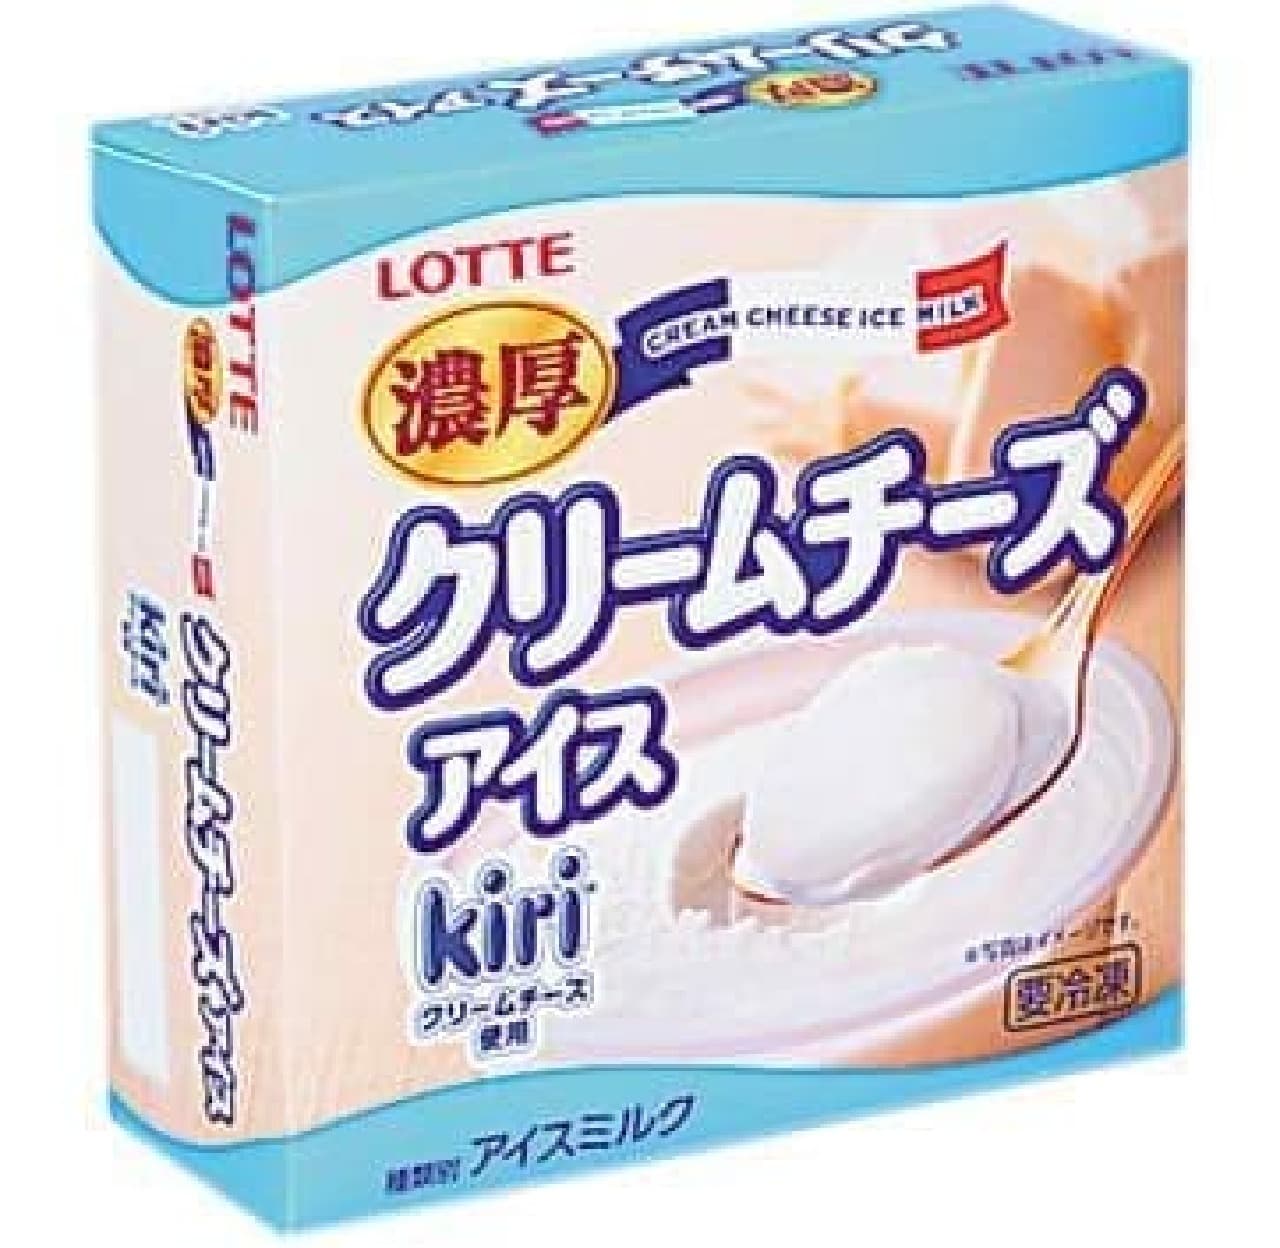 Lawson with kiri cheese cup ice cream!